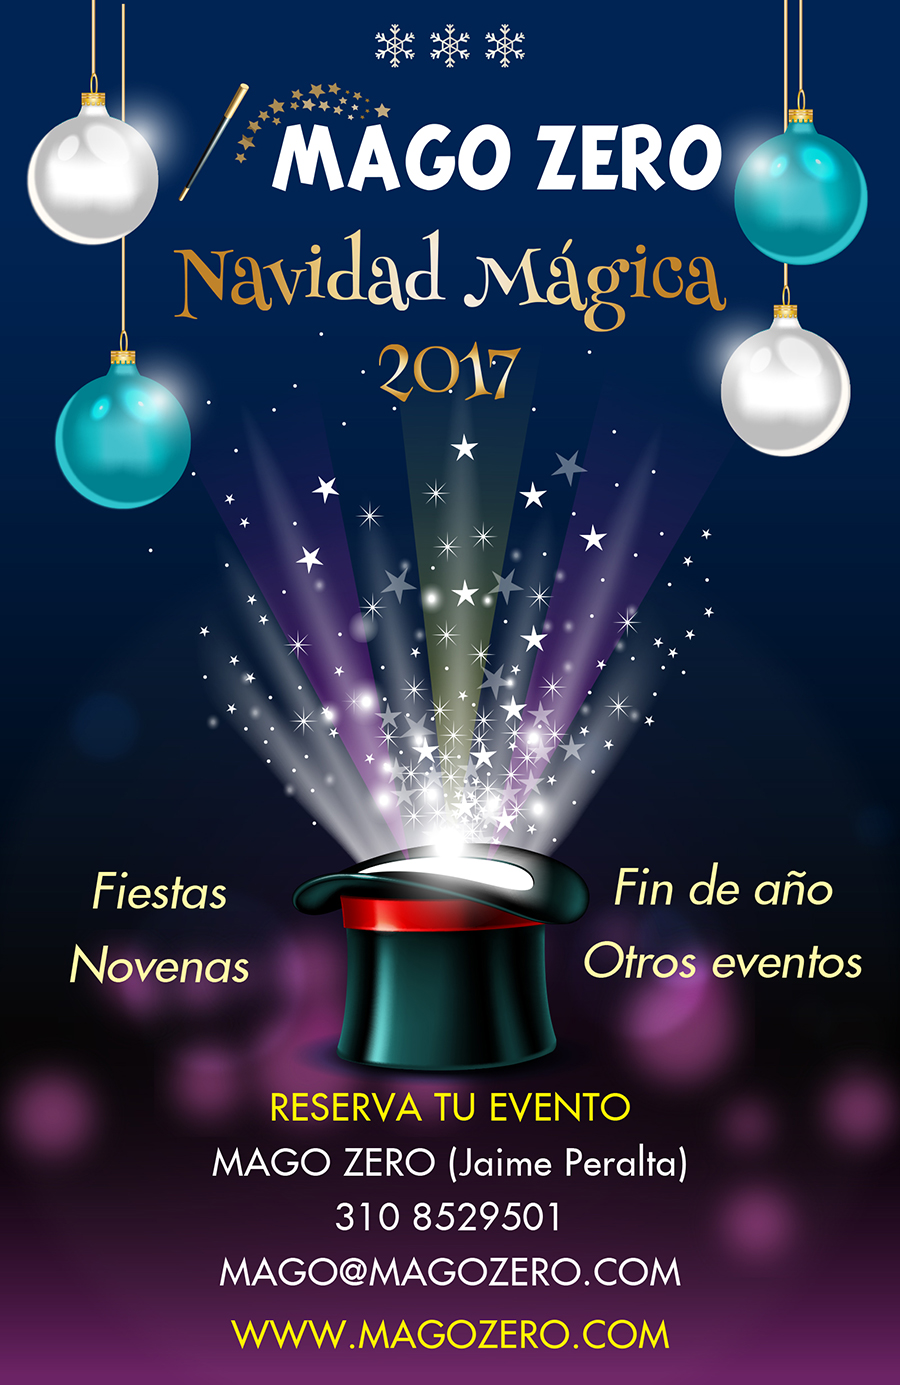 show de magia en navidad 2017